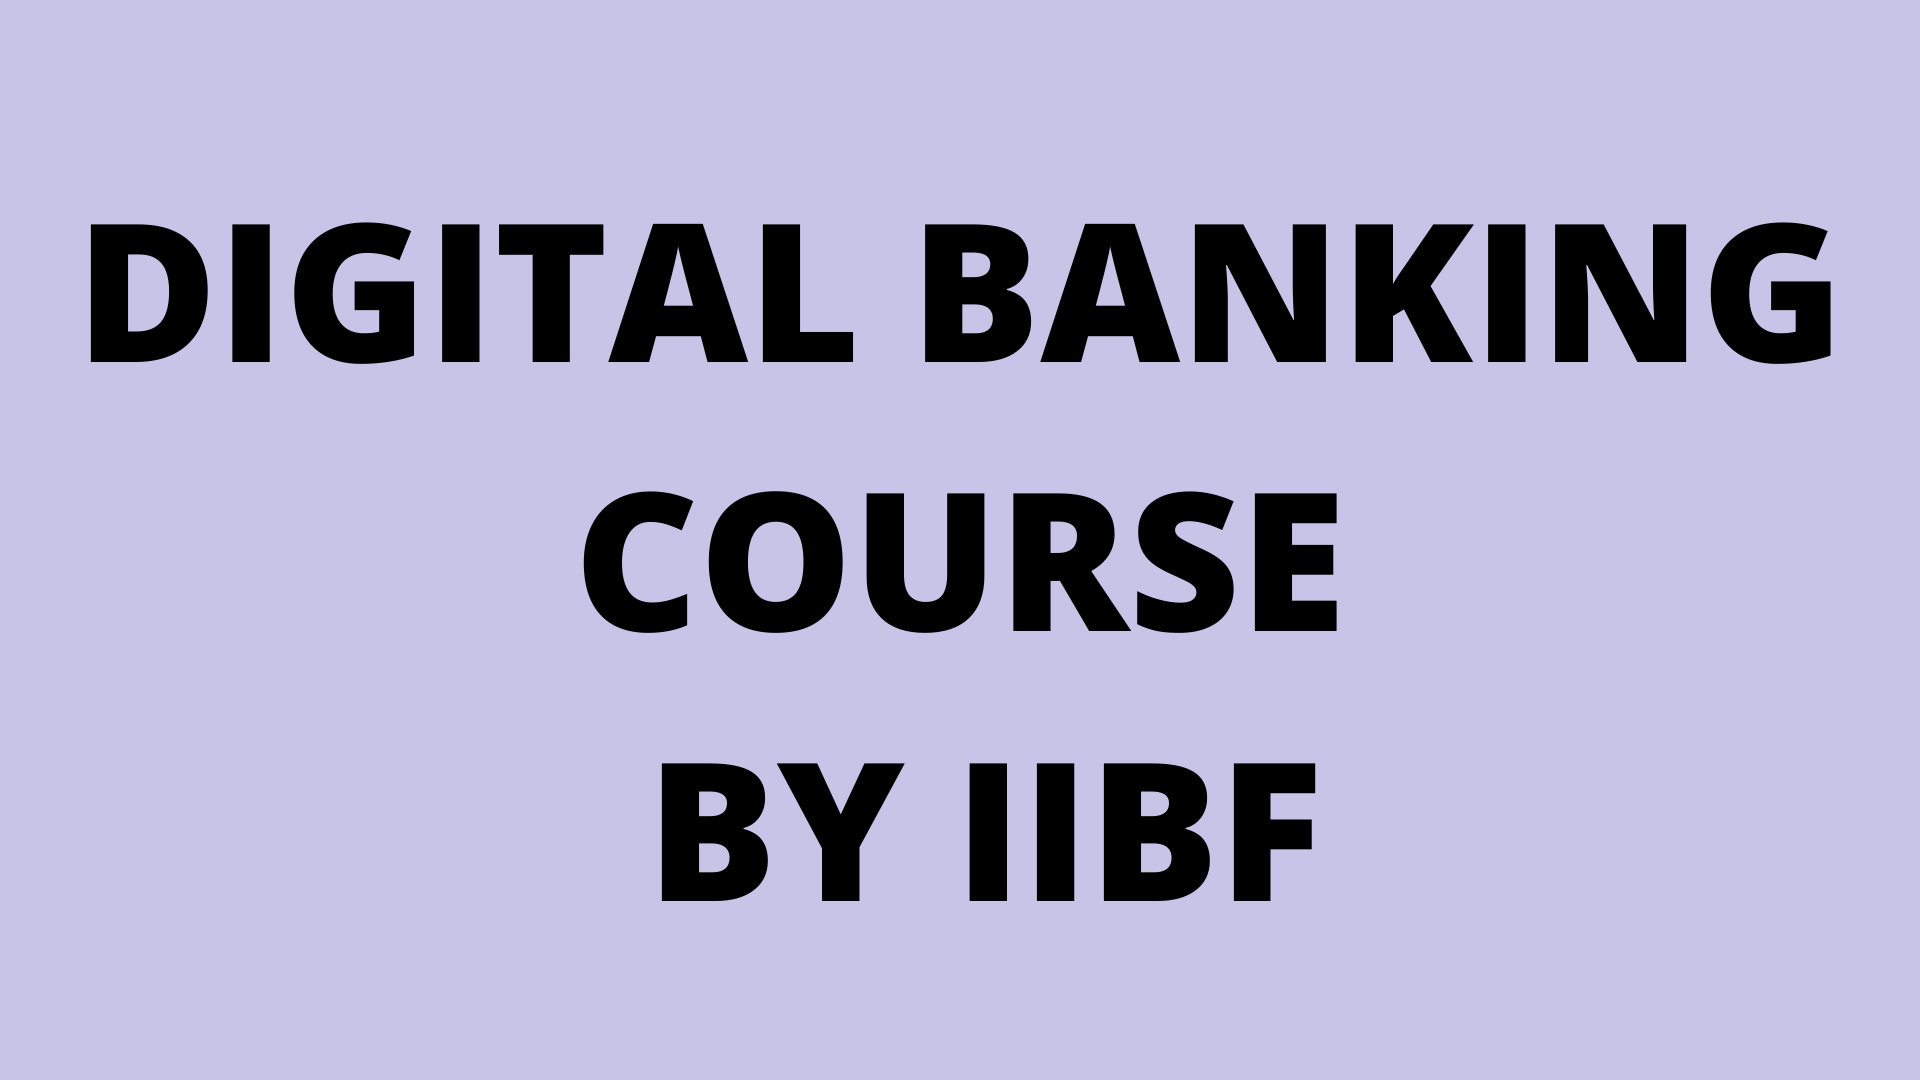 Digital Banking Course By IIBF